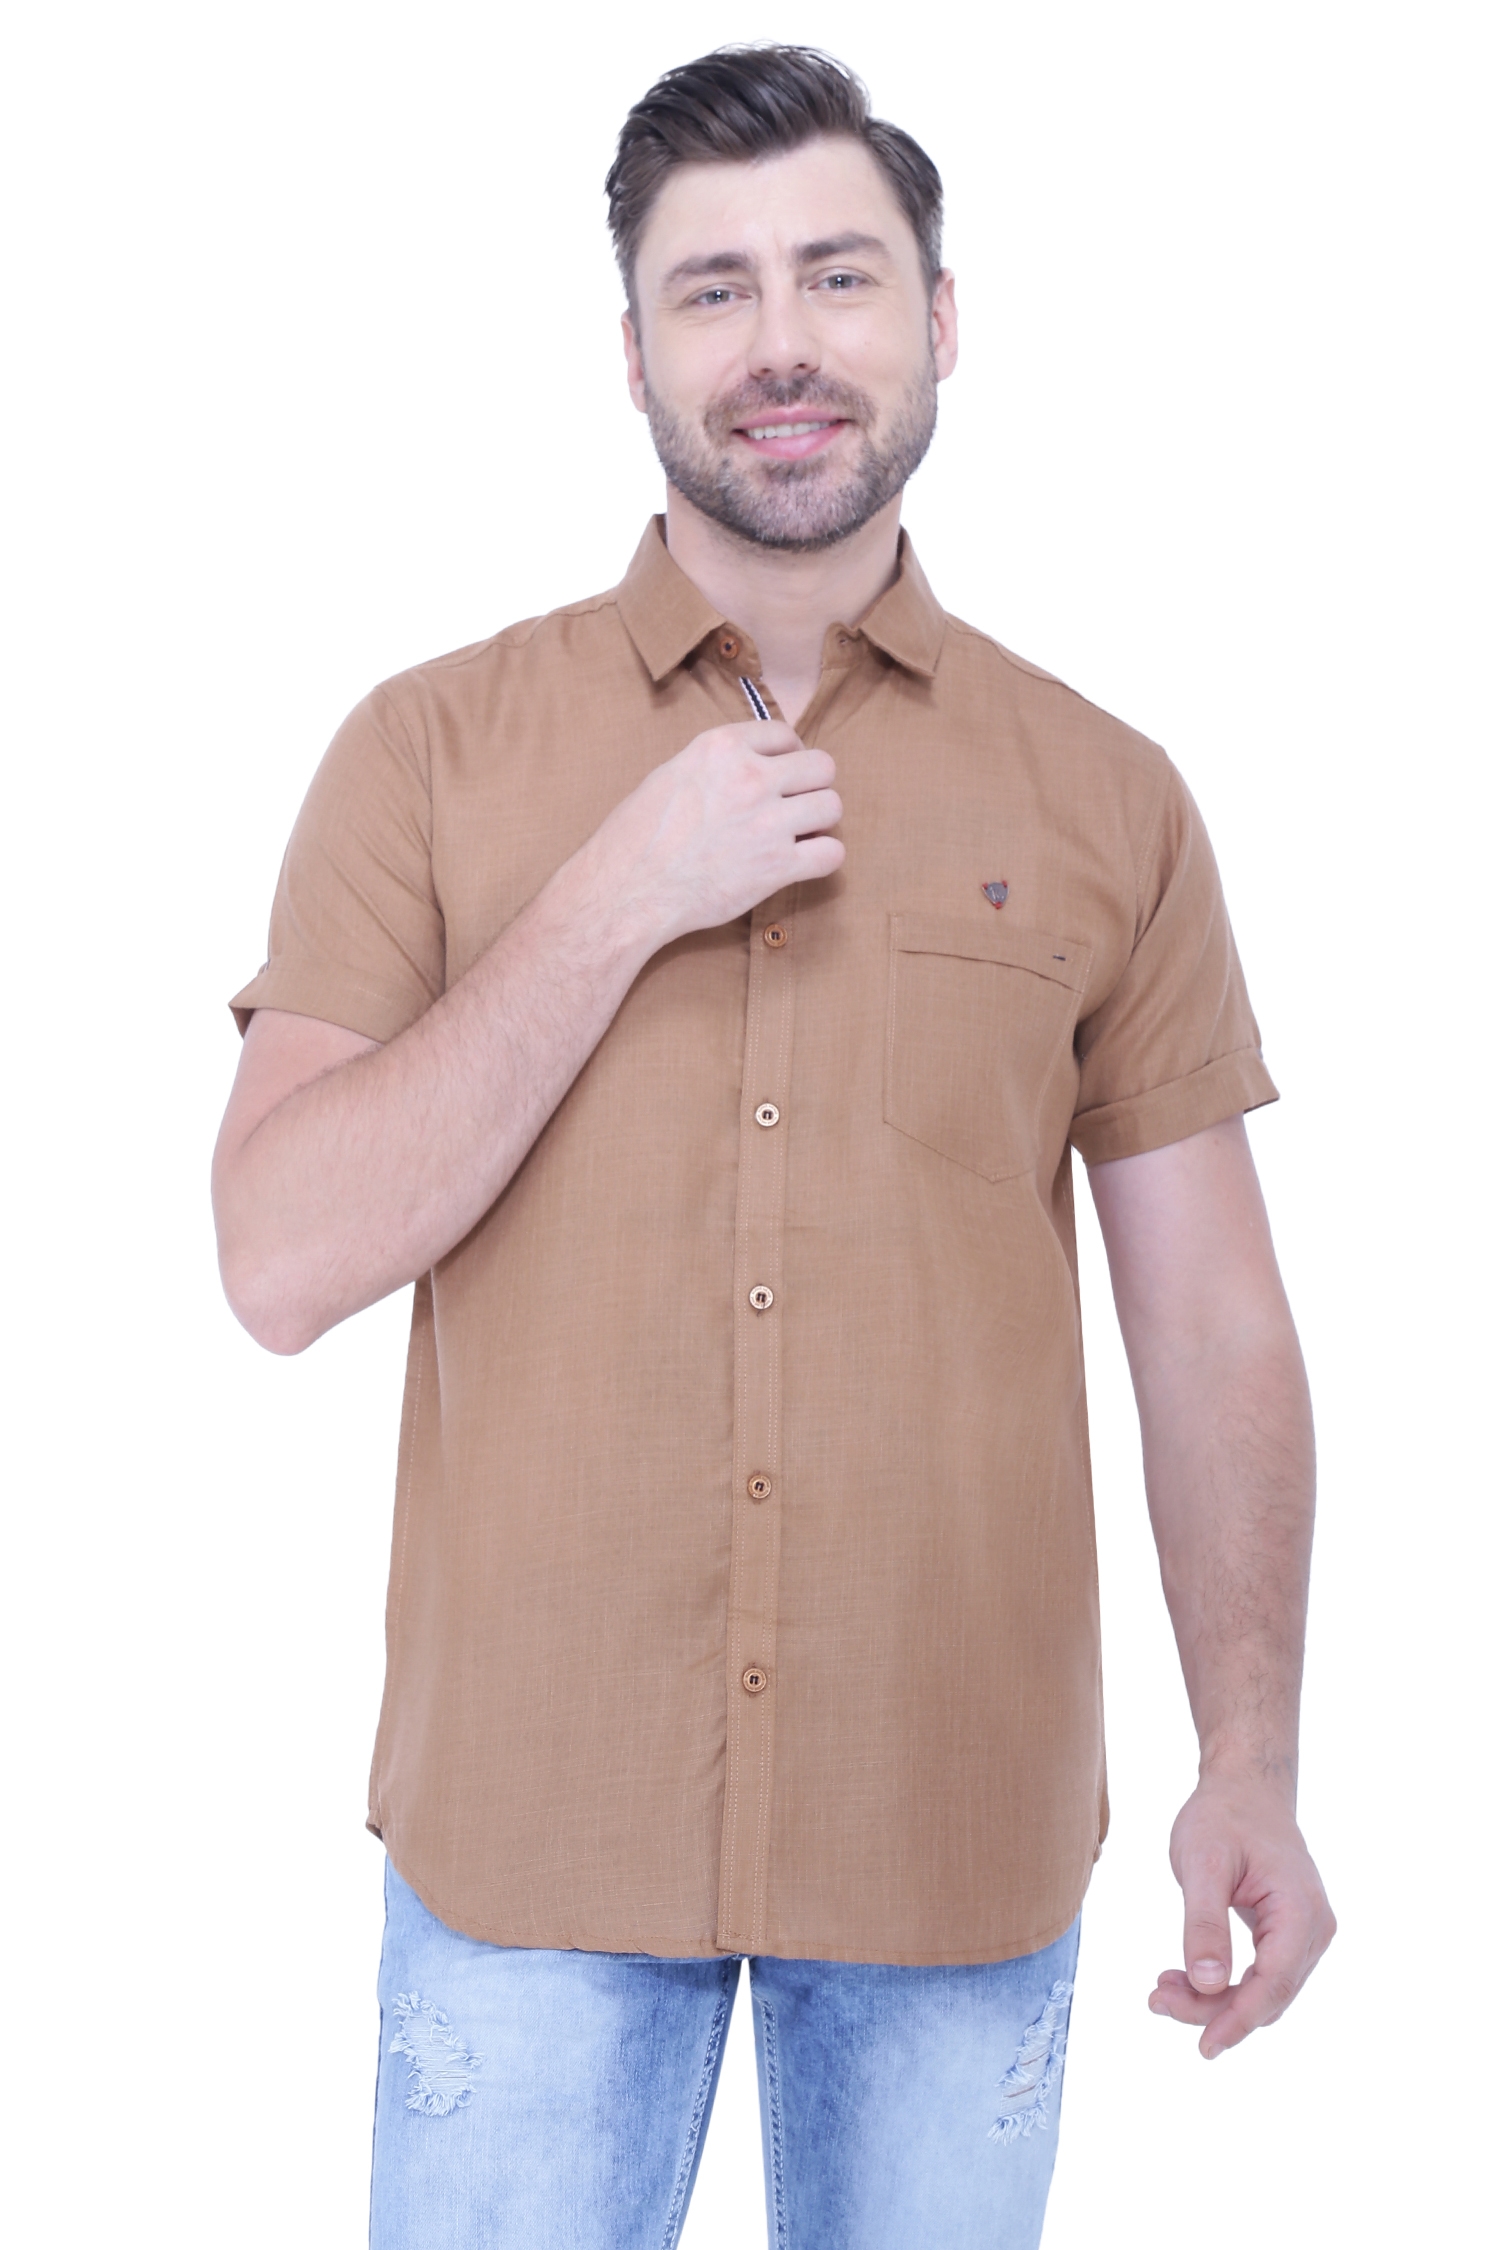 Kuons Avenue | Kuons Avenue Men's Linen Blend Half Sleeves Casual Shirt-KACLHS1238